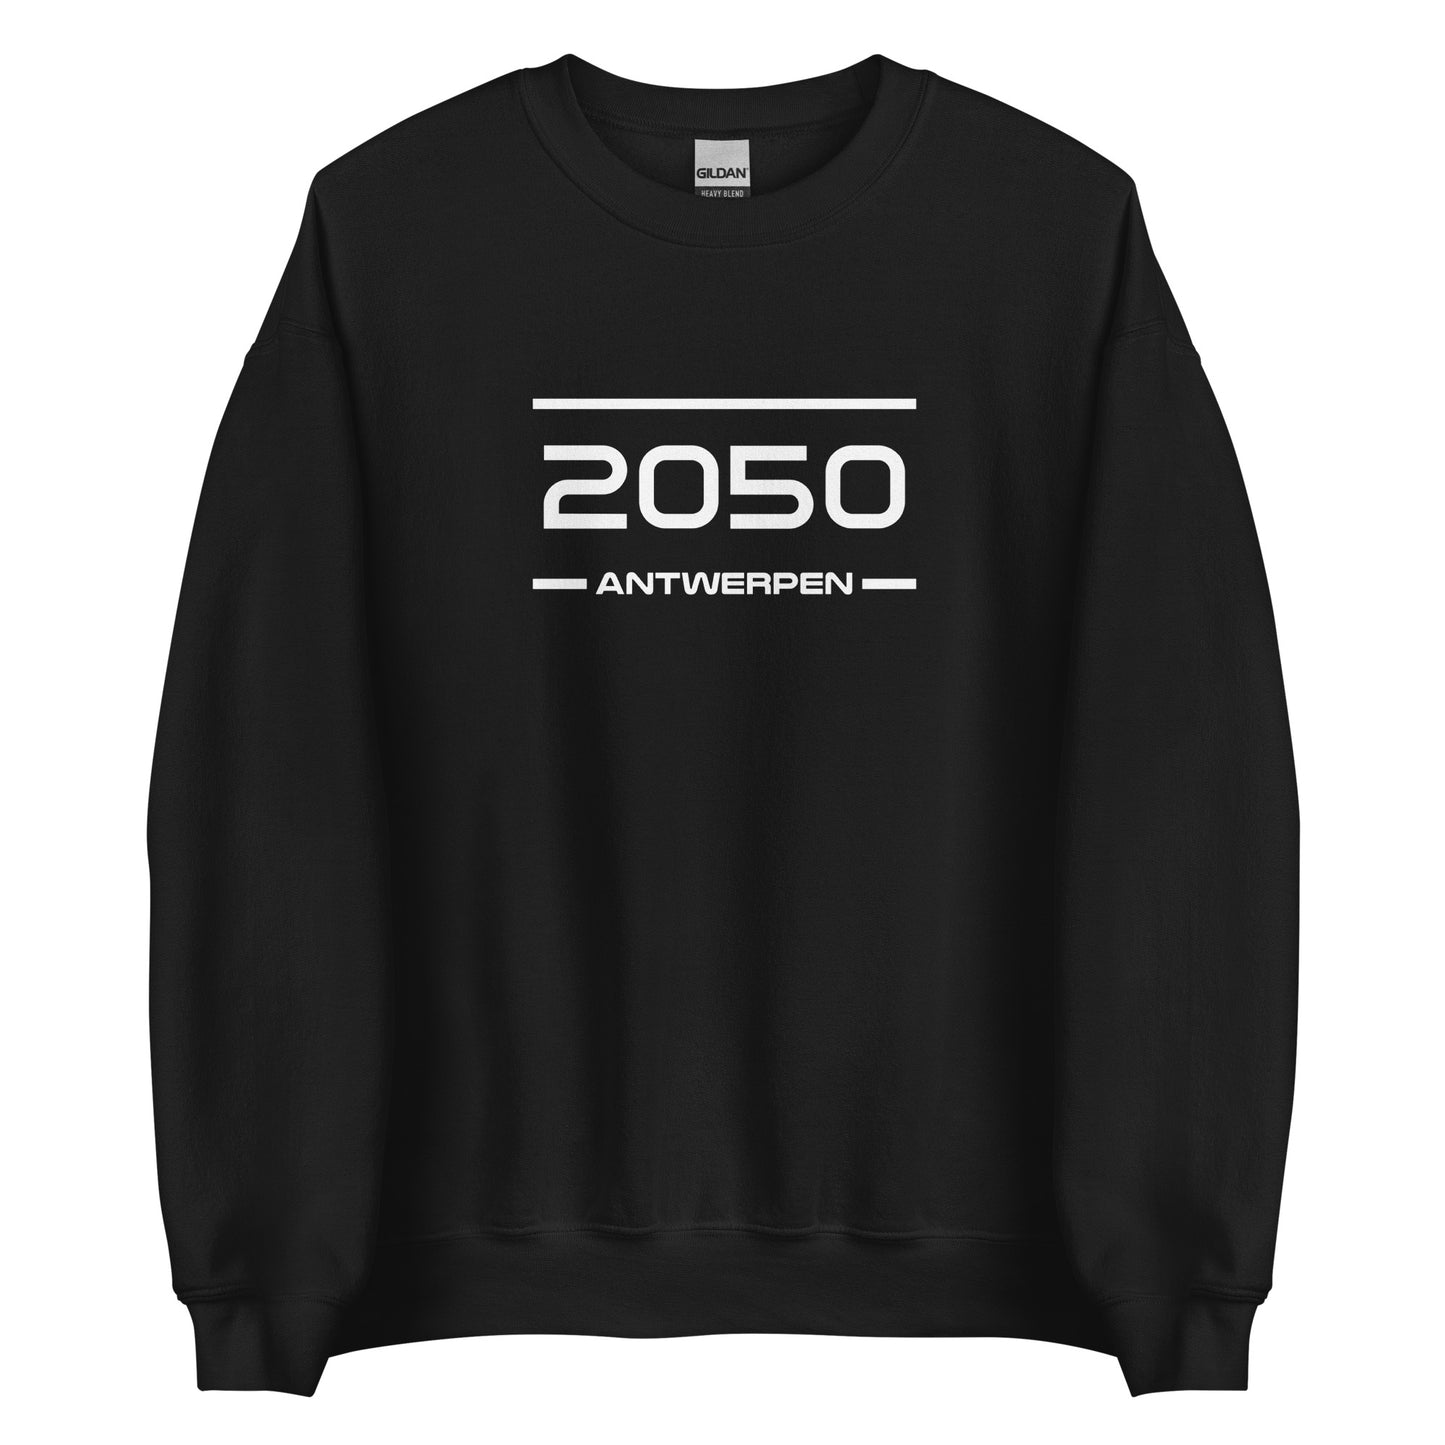 Sweater - 2050 - Antwerpen (M/V)